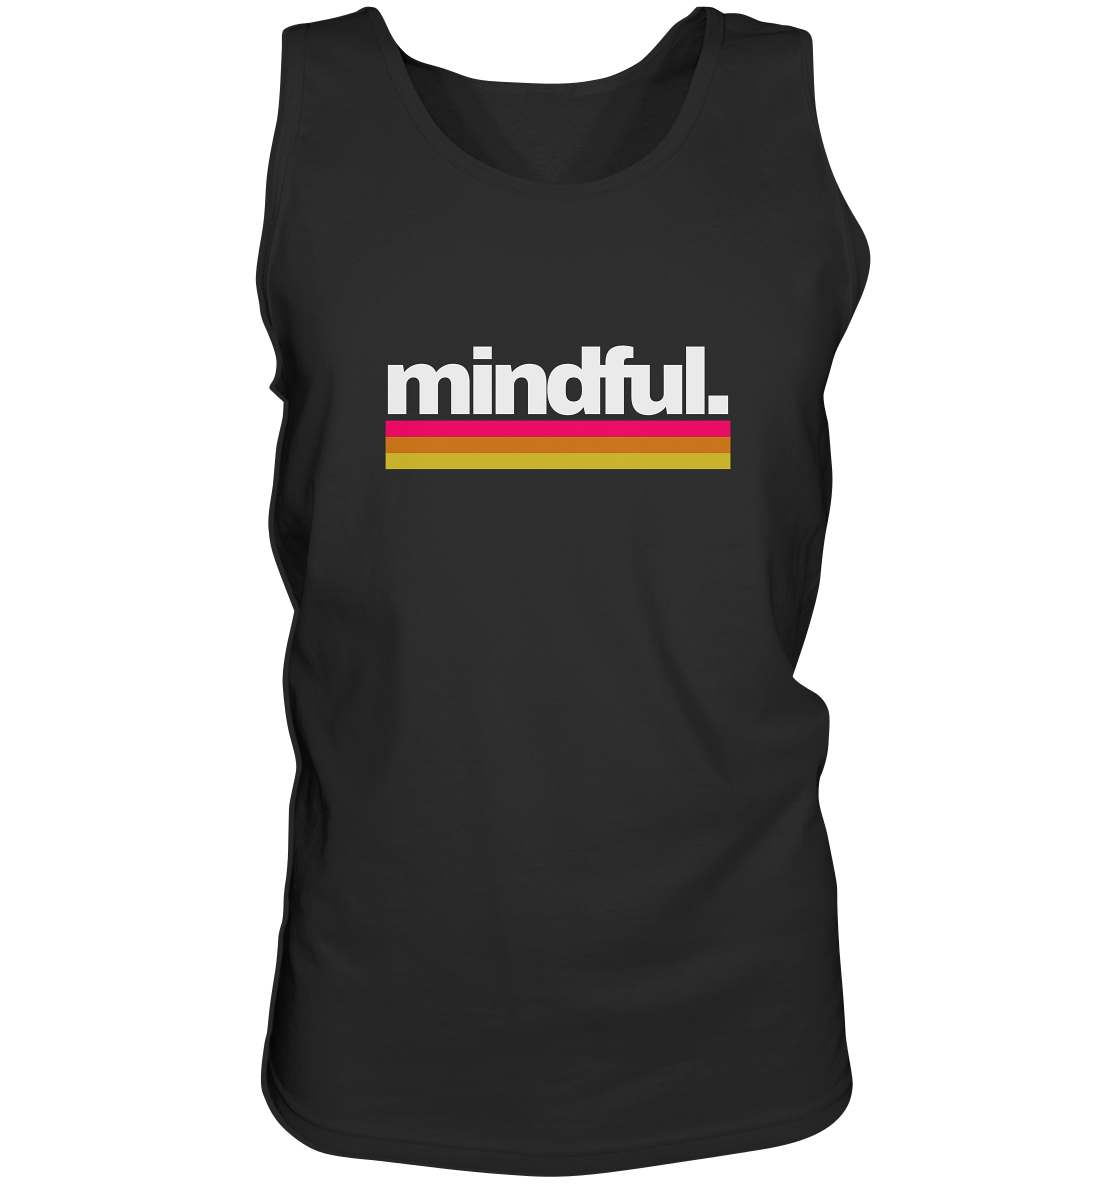 Mindful. 2.0 | Premium Cotton Mens Tank Top